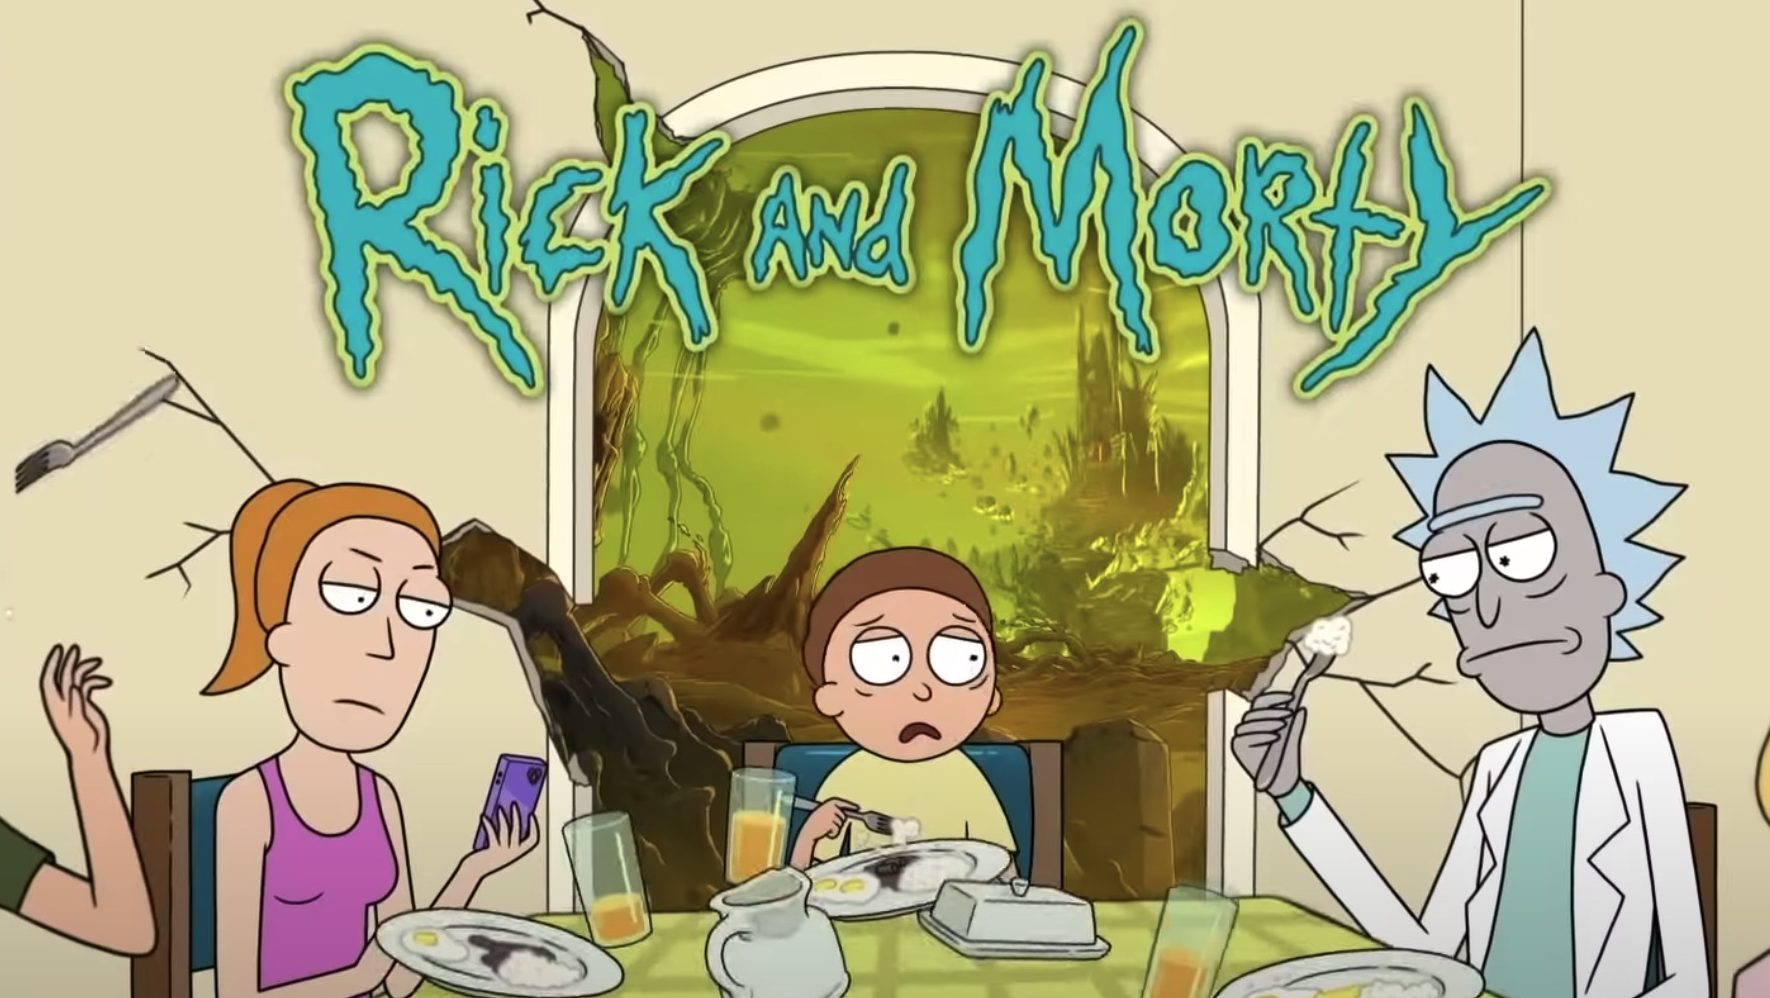 rick and morty season 1 download free